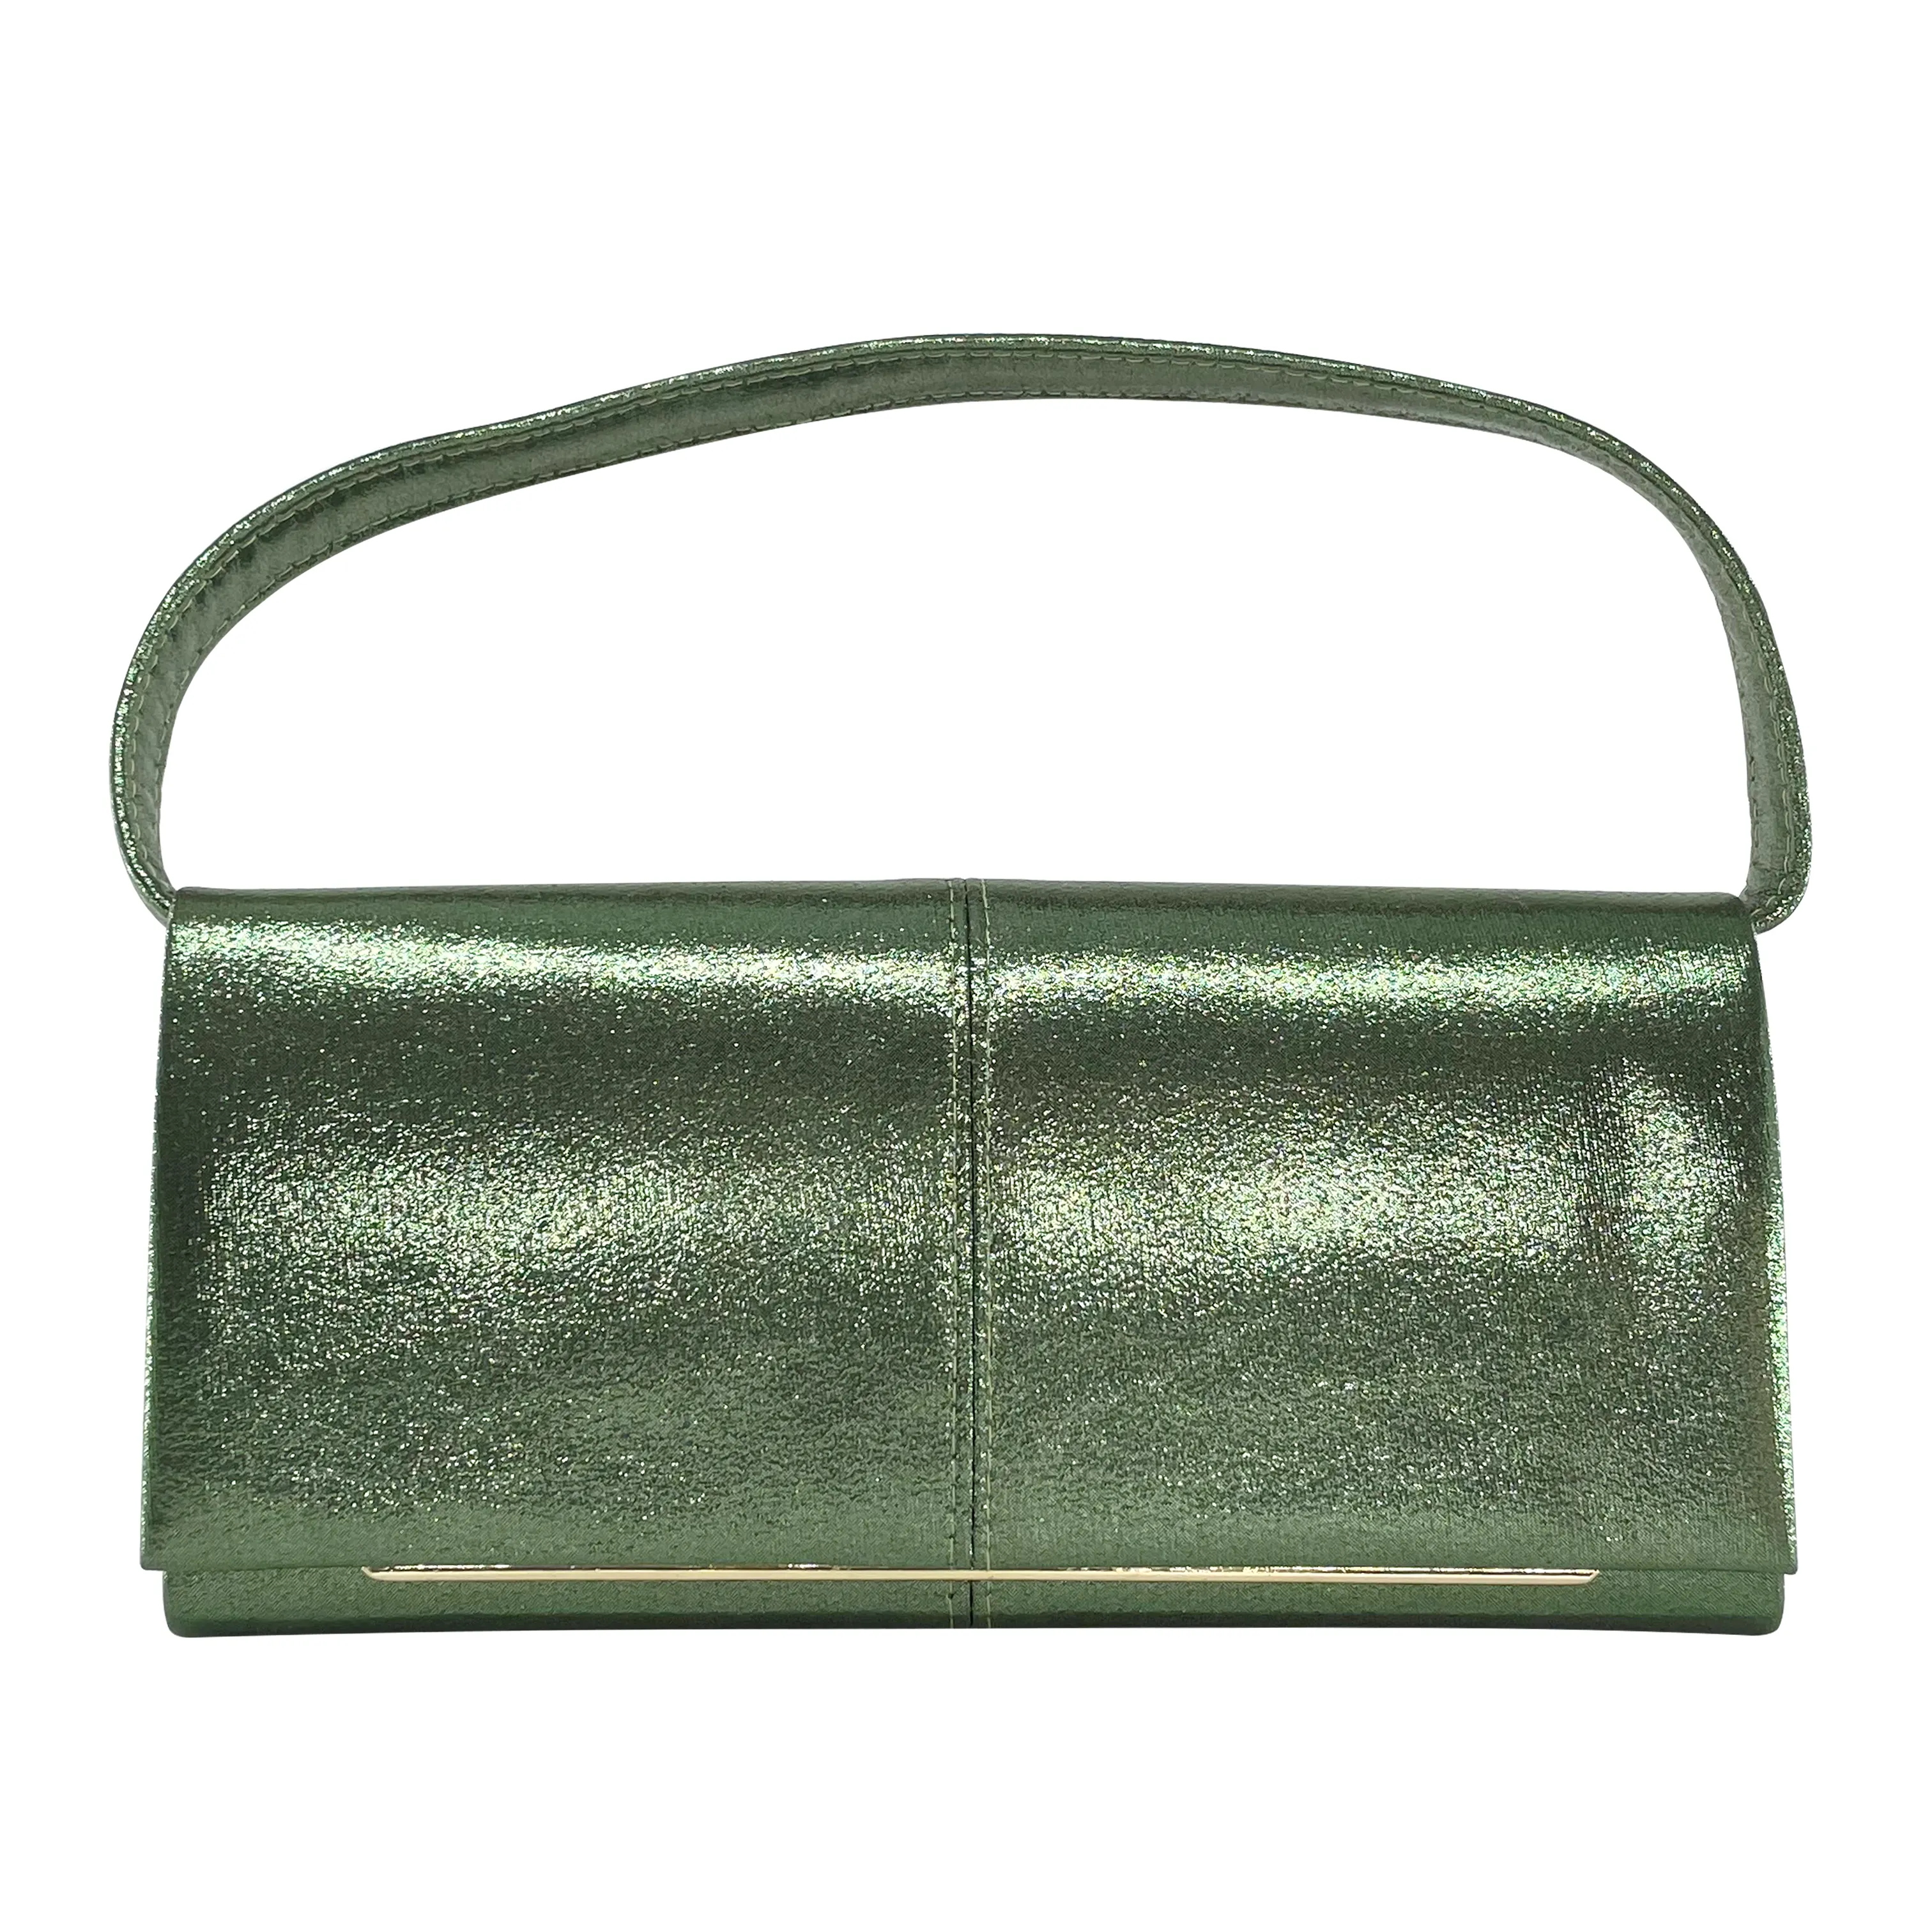 Handmade shiny Pu Leather green Shoulder bag Handbag ladies party Purse Evening Clutch Bag